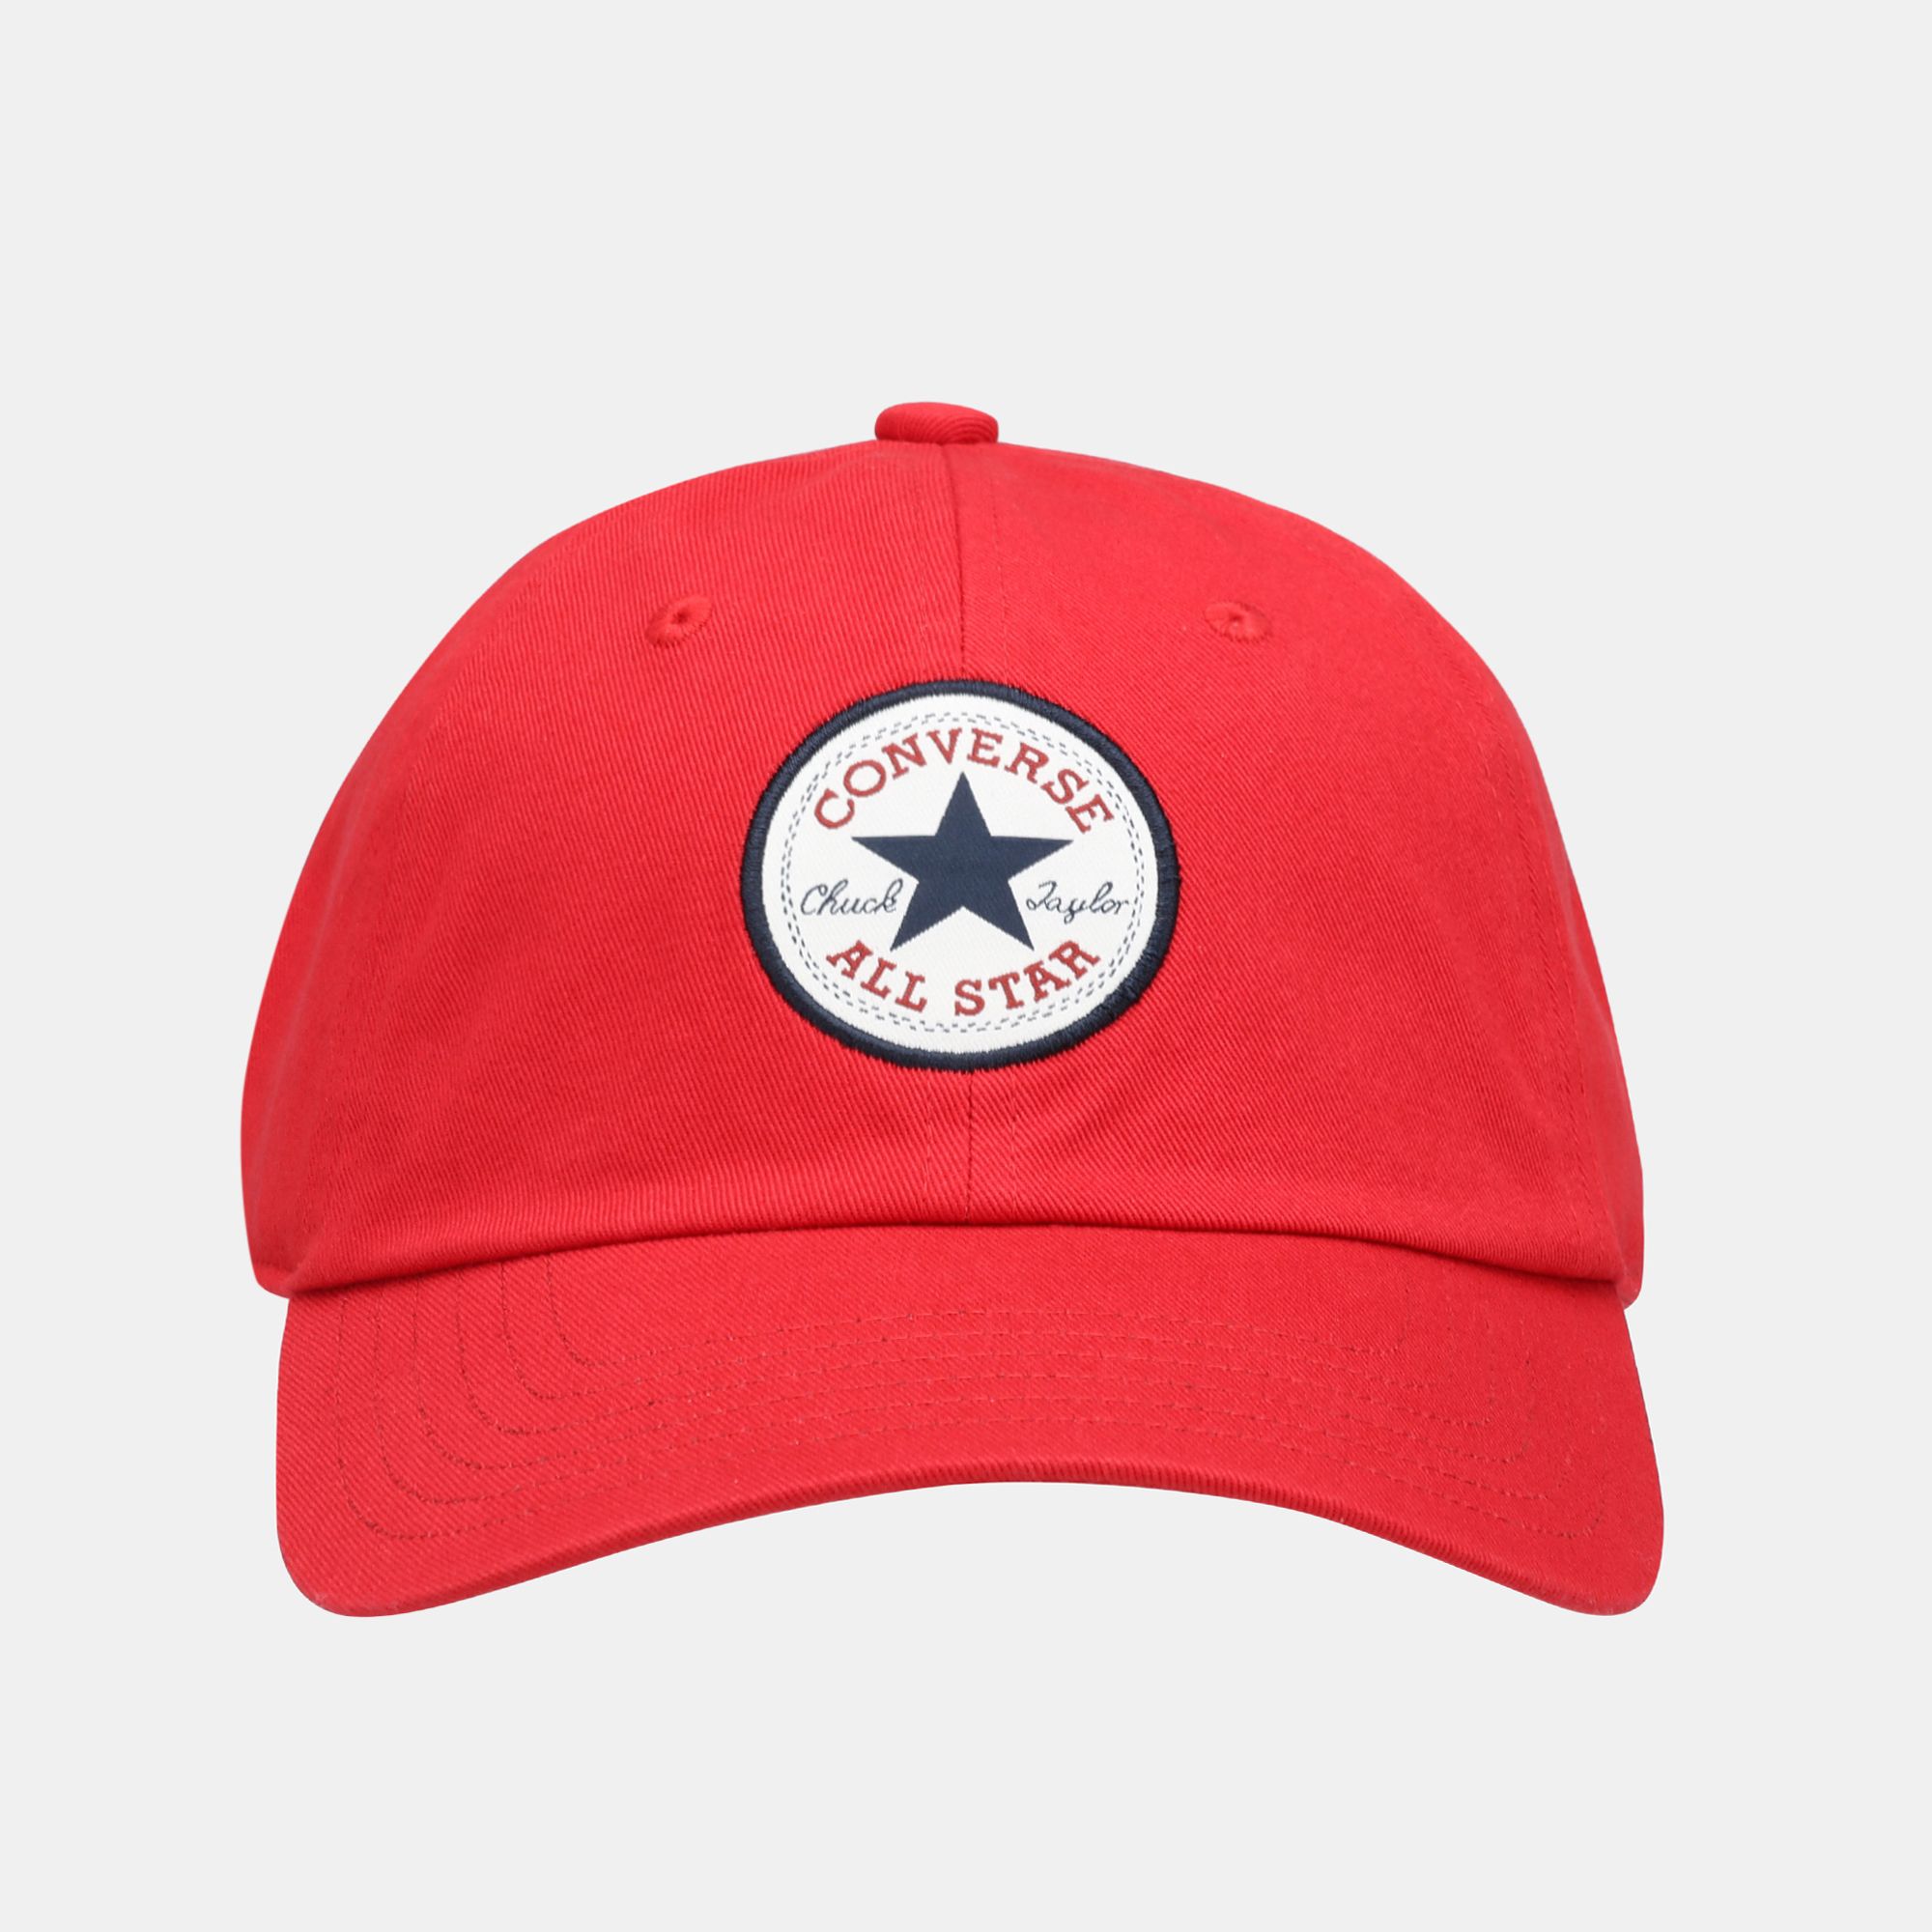 converse hat price